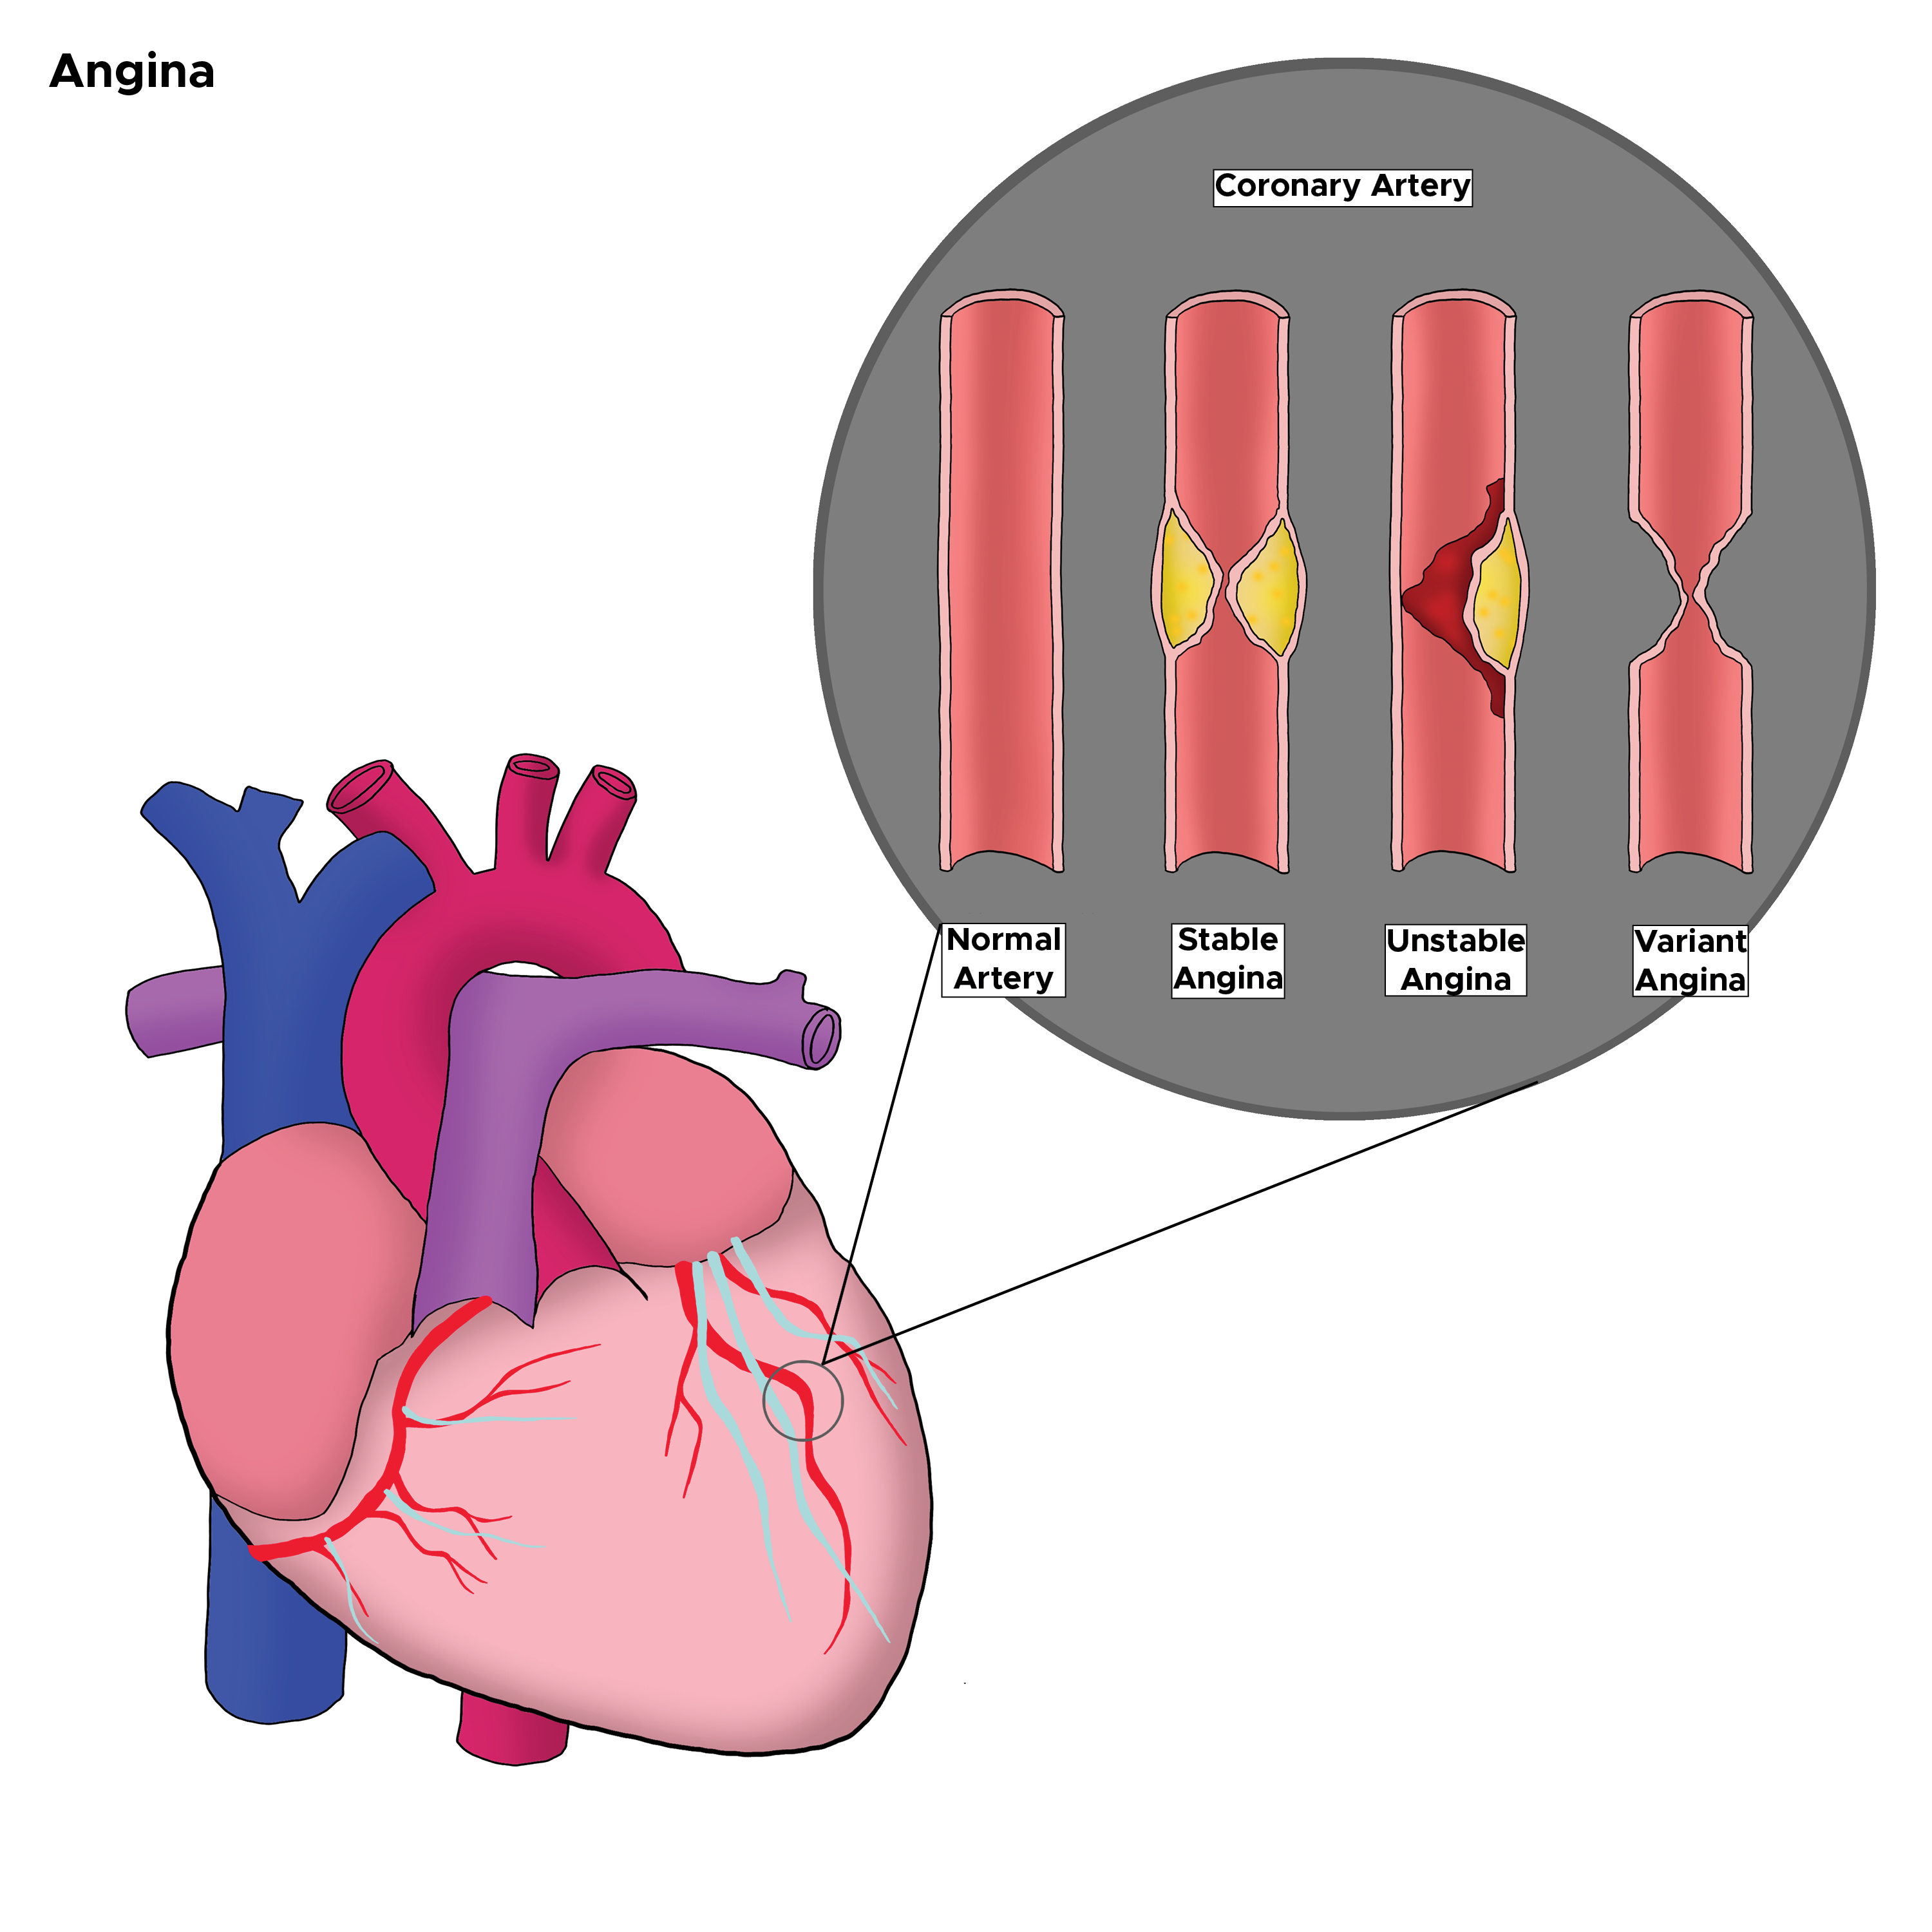 <p>Types of Angina in the Coronary Artery